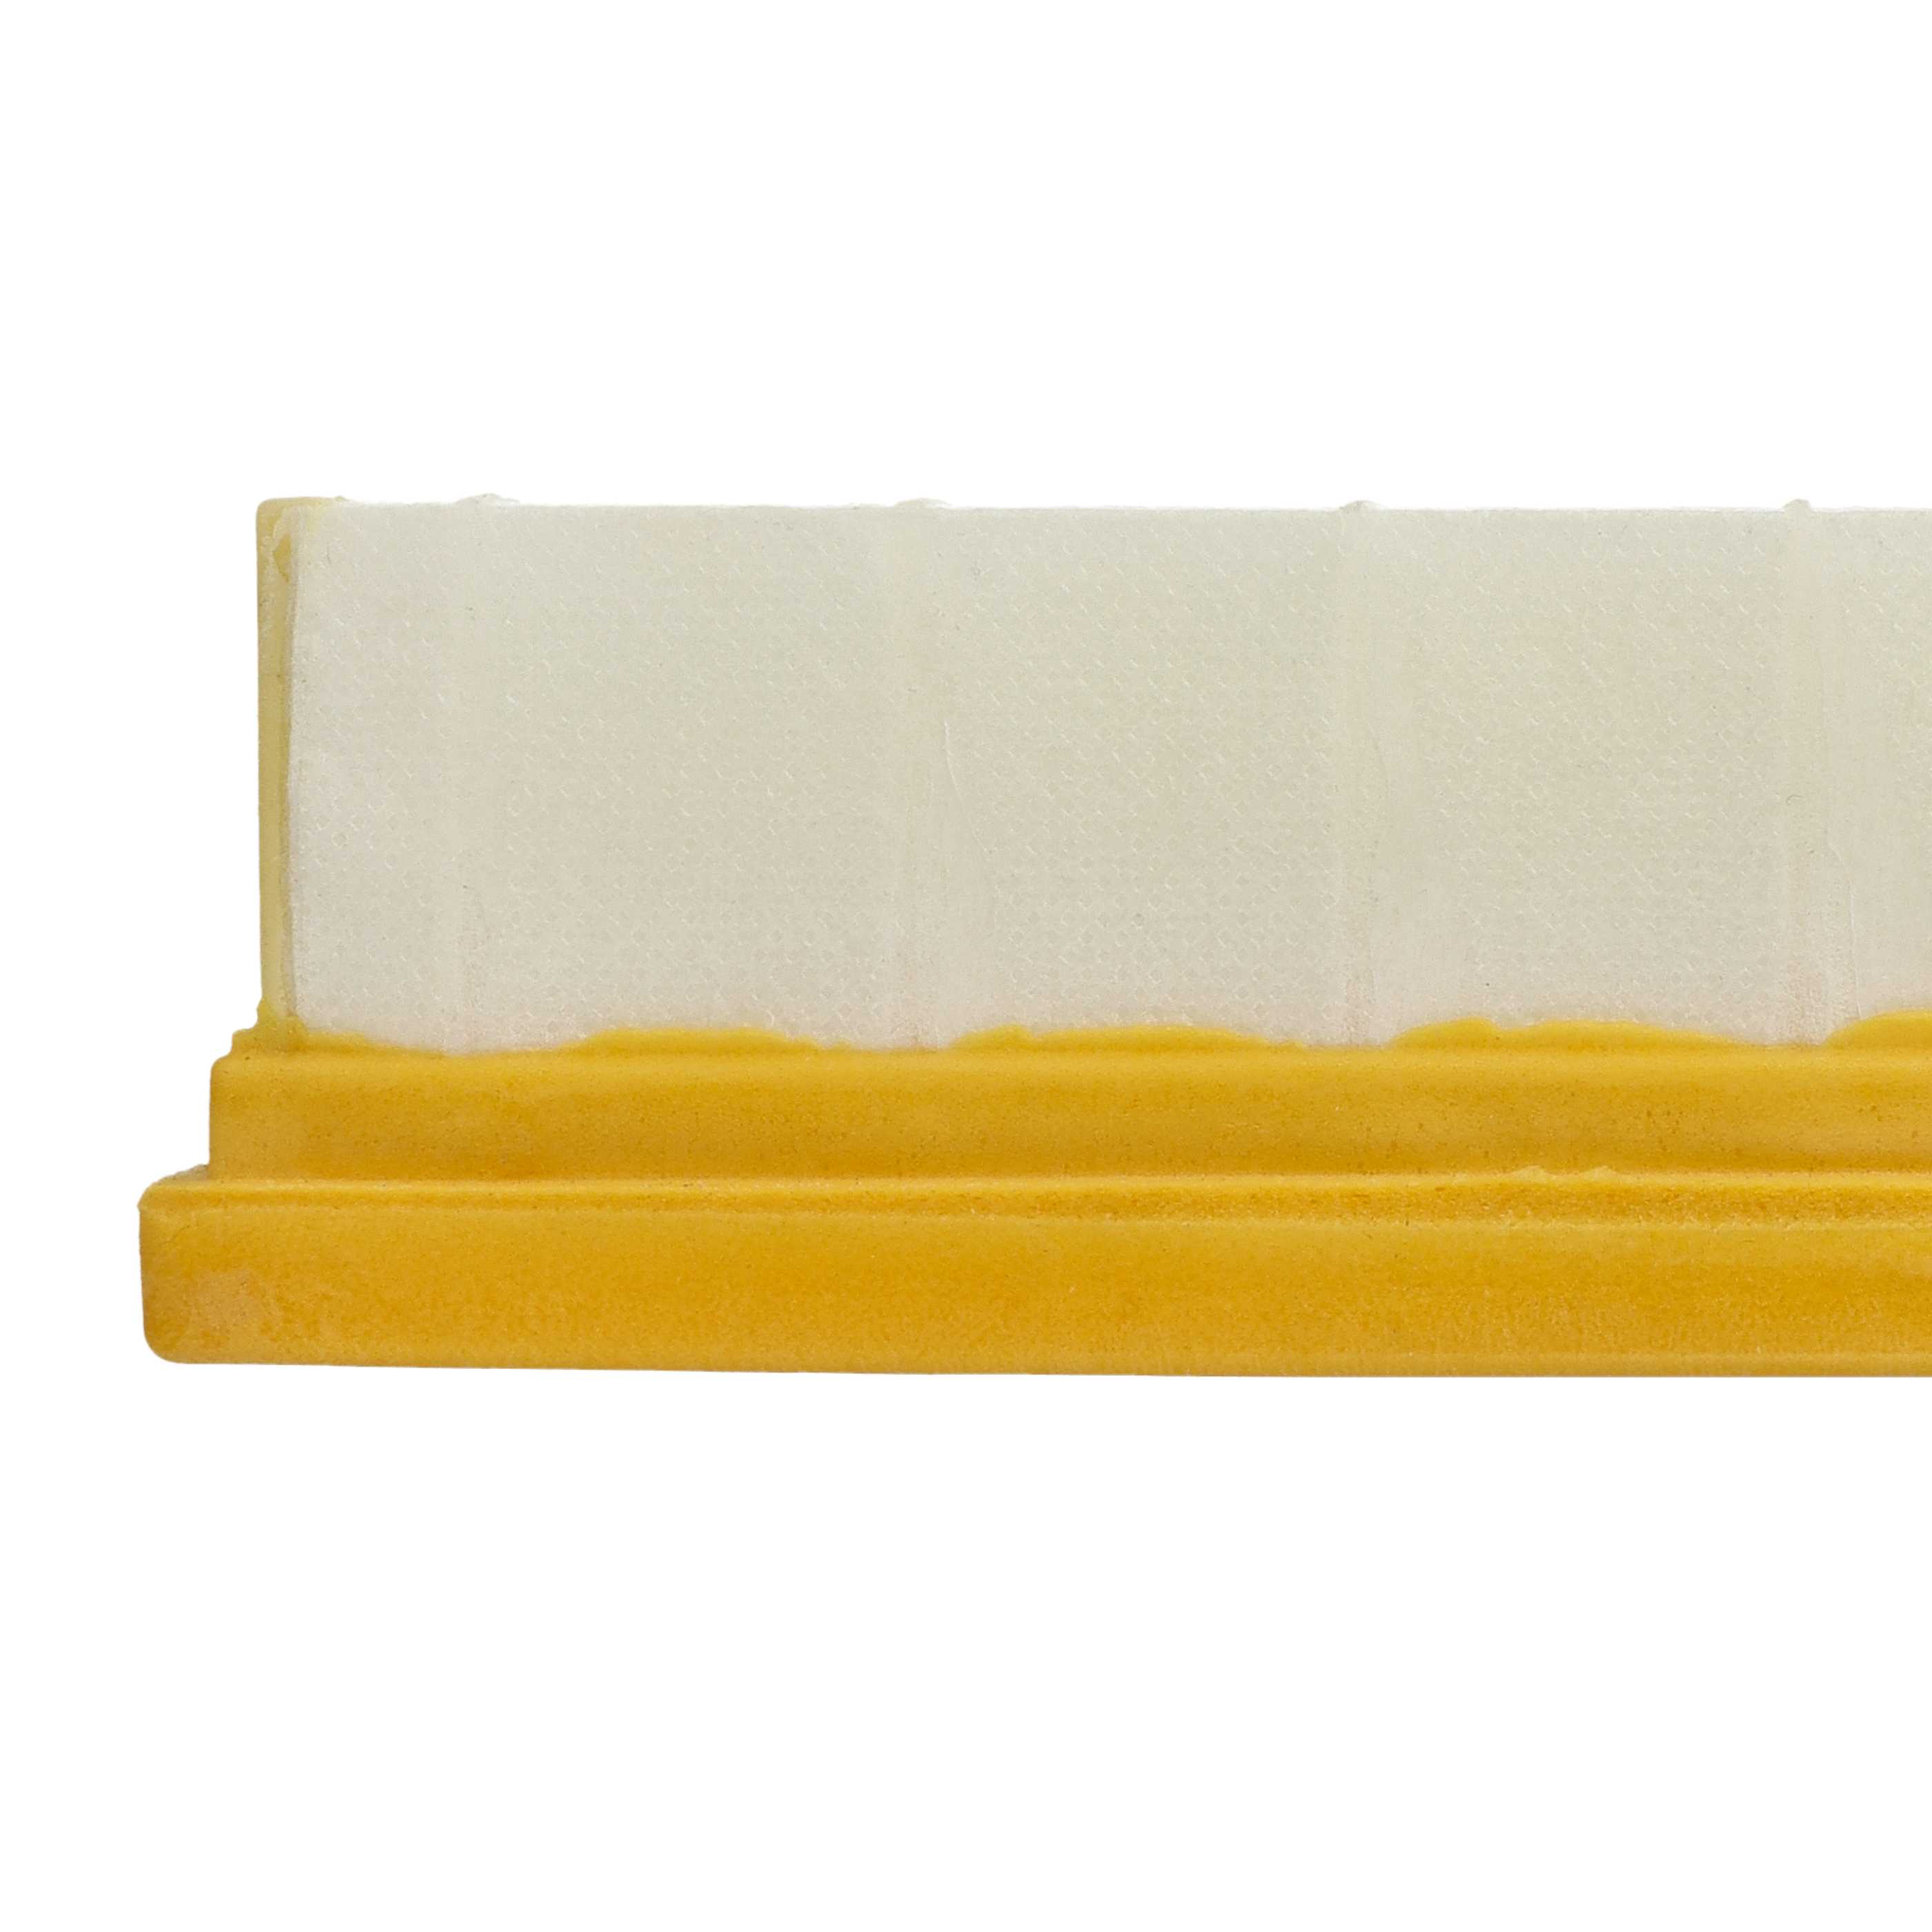 3x Filtro reemplaza Festo 496170, 496172, 4.96170, 4.96172 para aspiradora - filtro Hepa blanco / amarillo